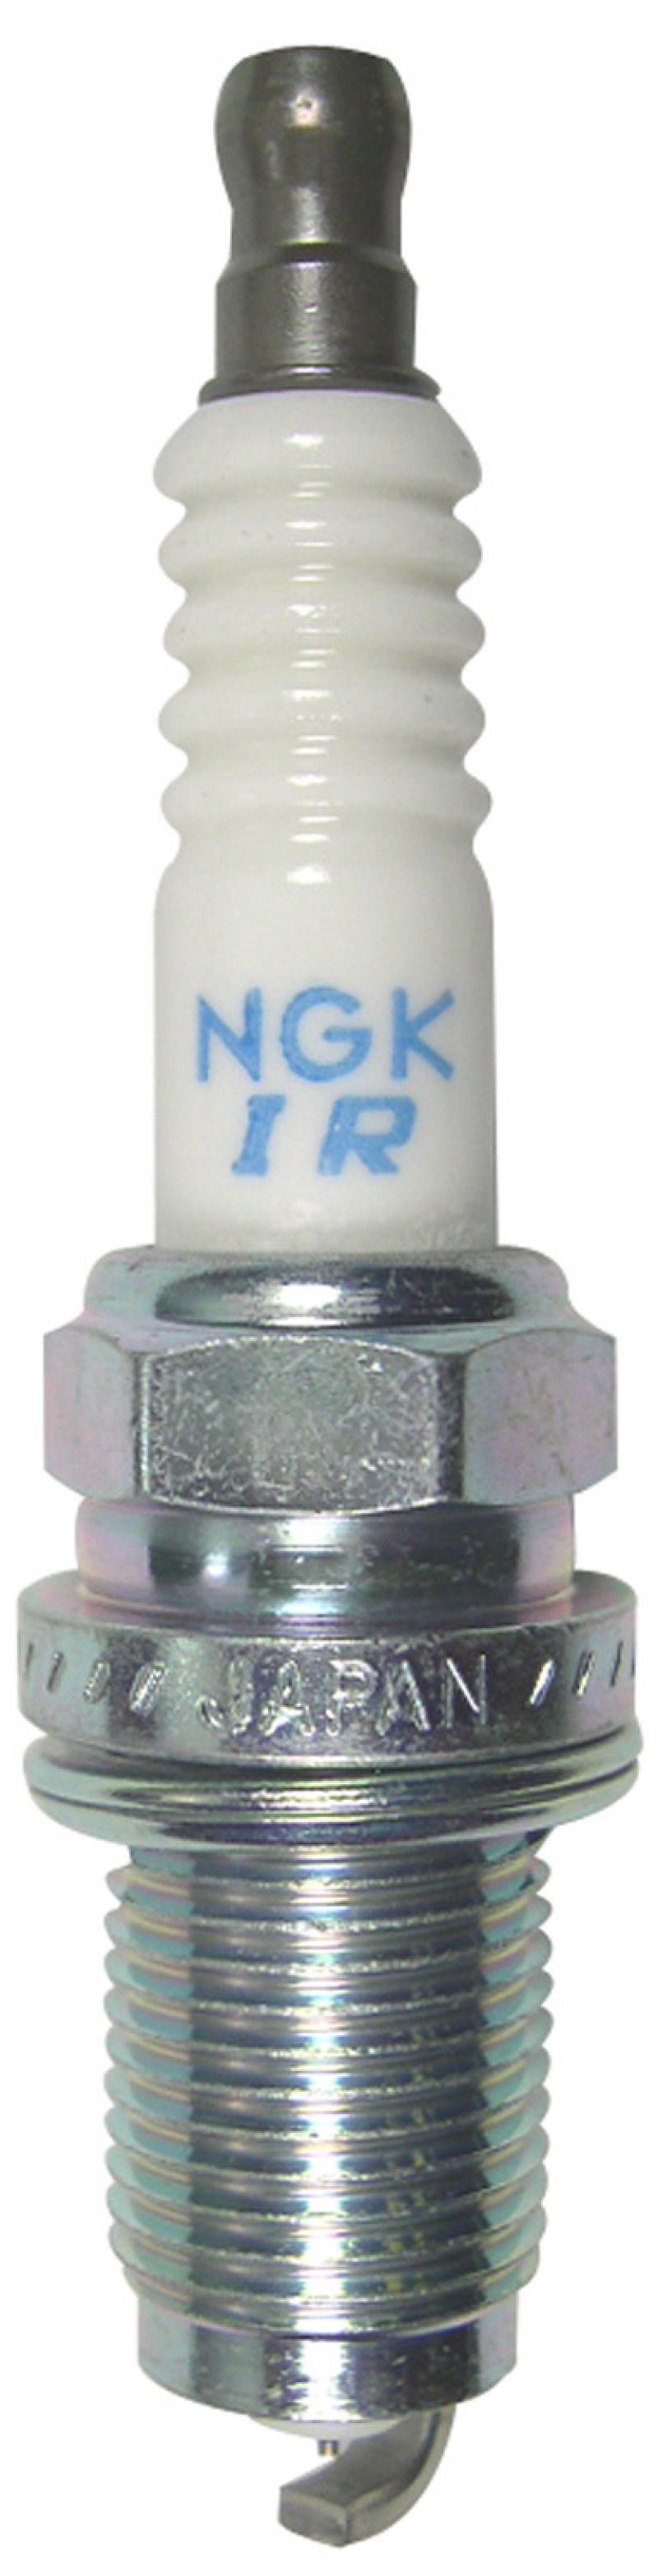 NGK Iridium/Platinum Spark Plug Box of 4 (IZFR6K-11).